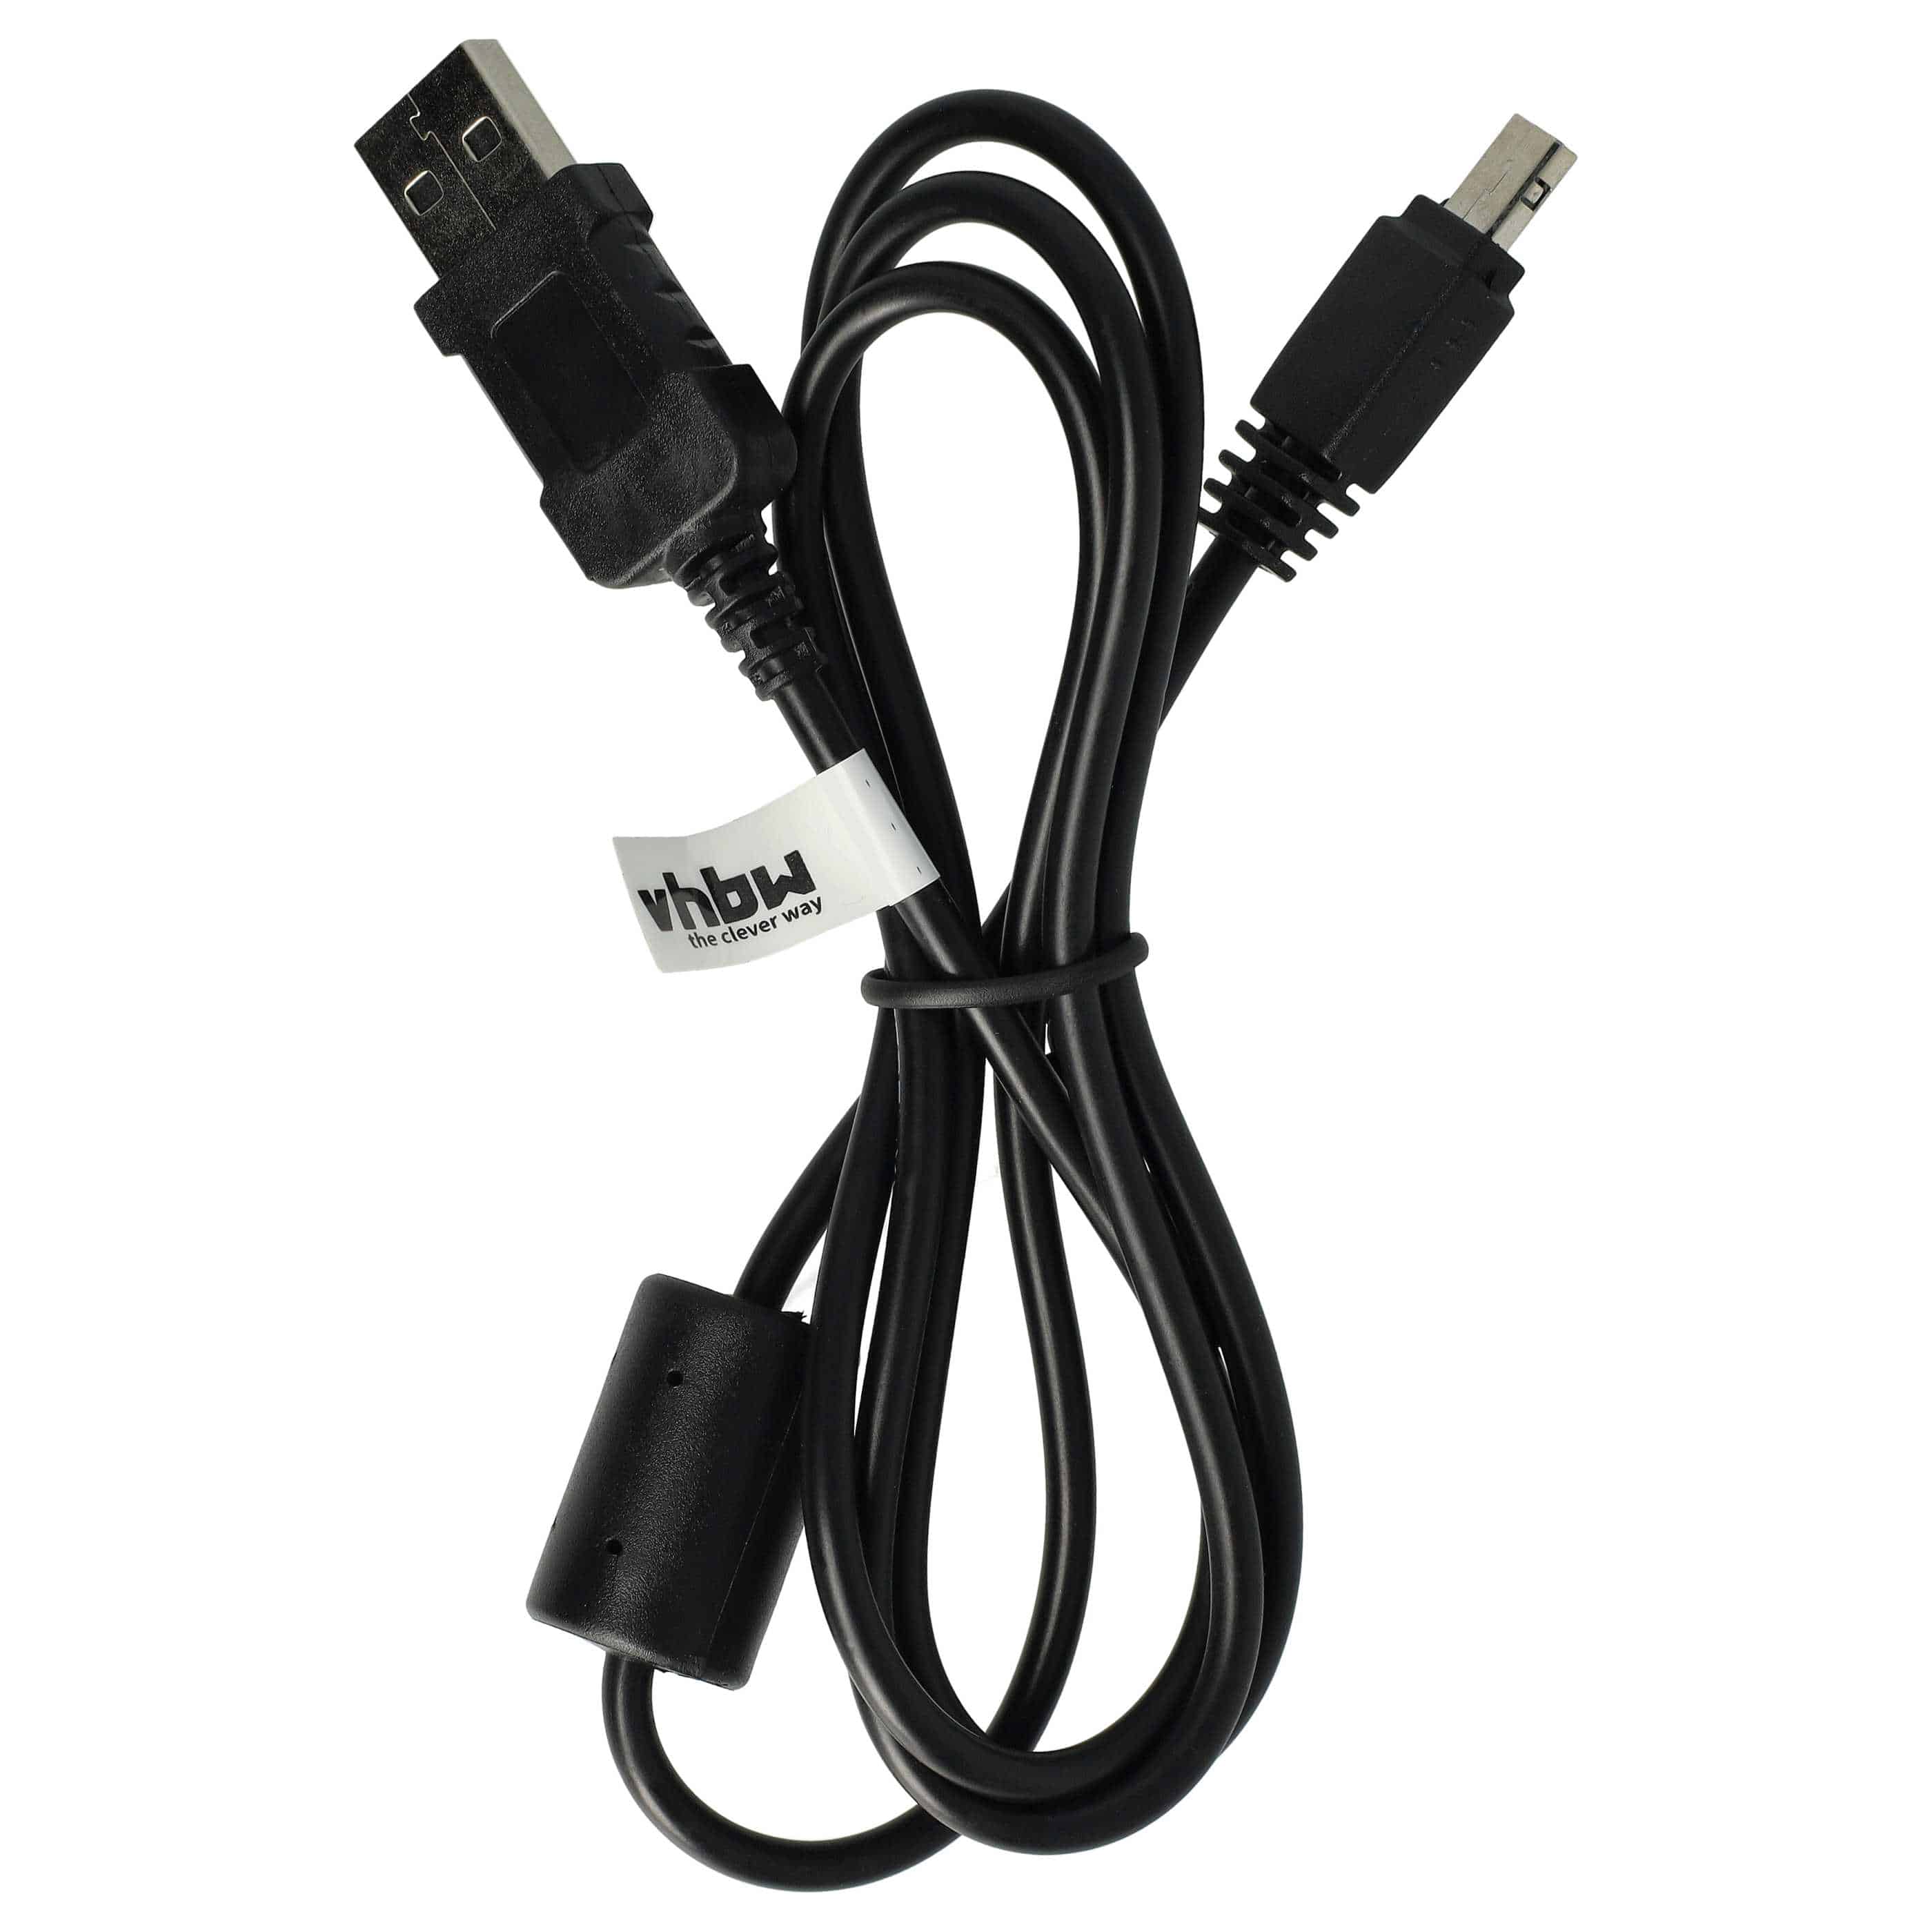 USB Datenkabel als Ersatz für Casio U-8, EMC-6U, EMC-6 Kamera - 100 cm